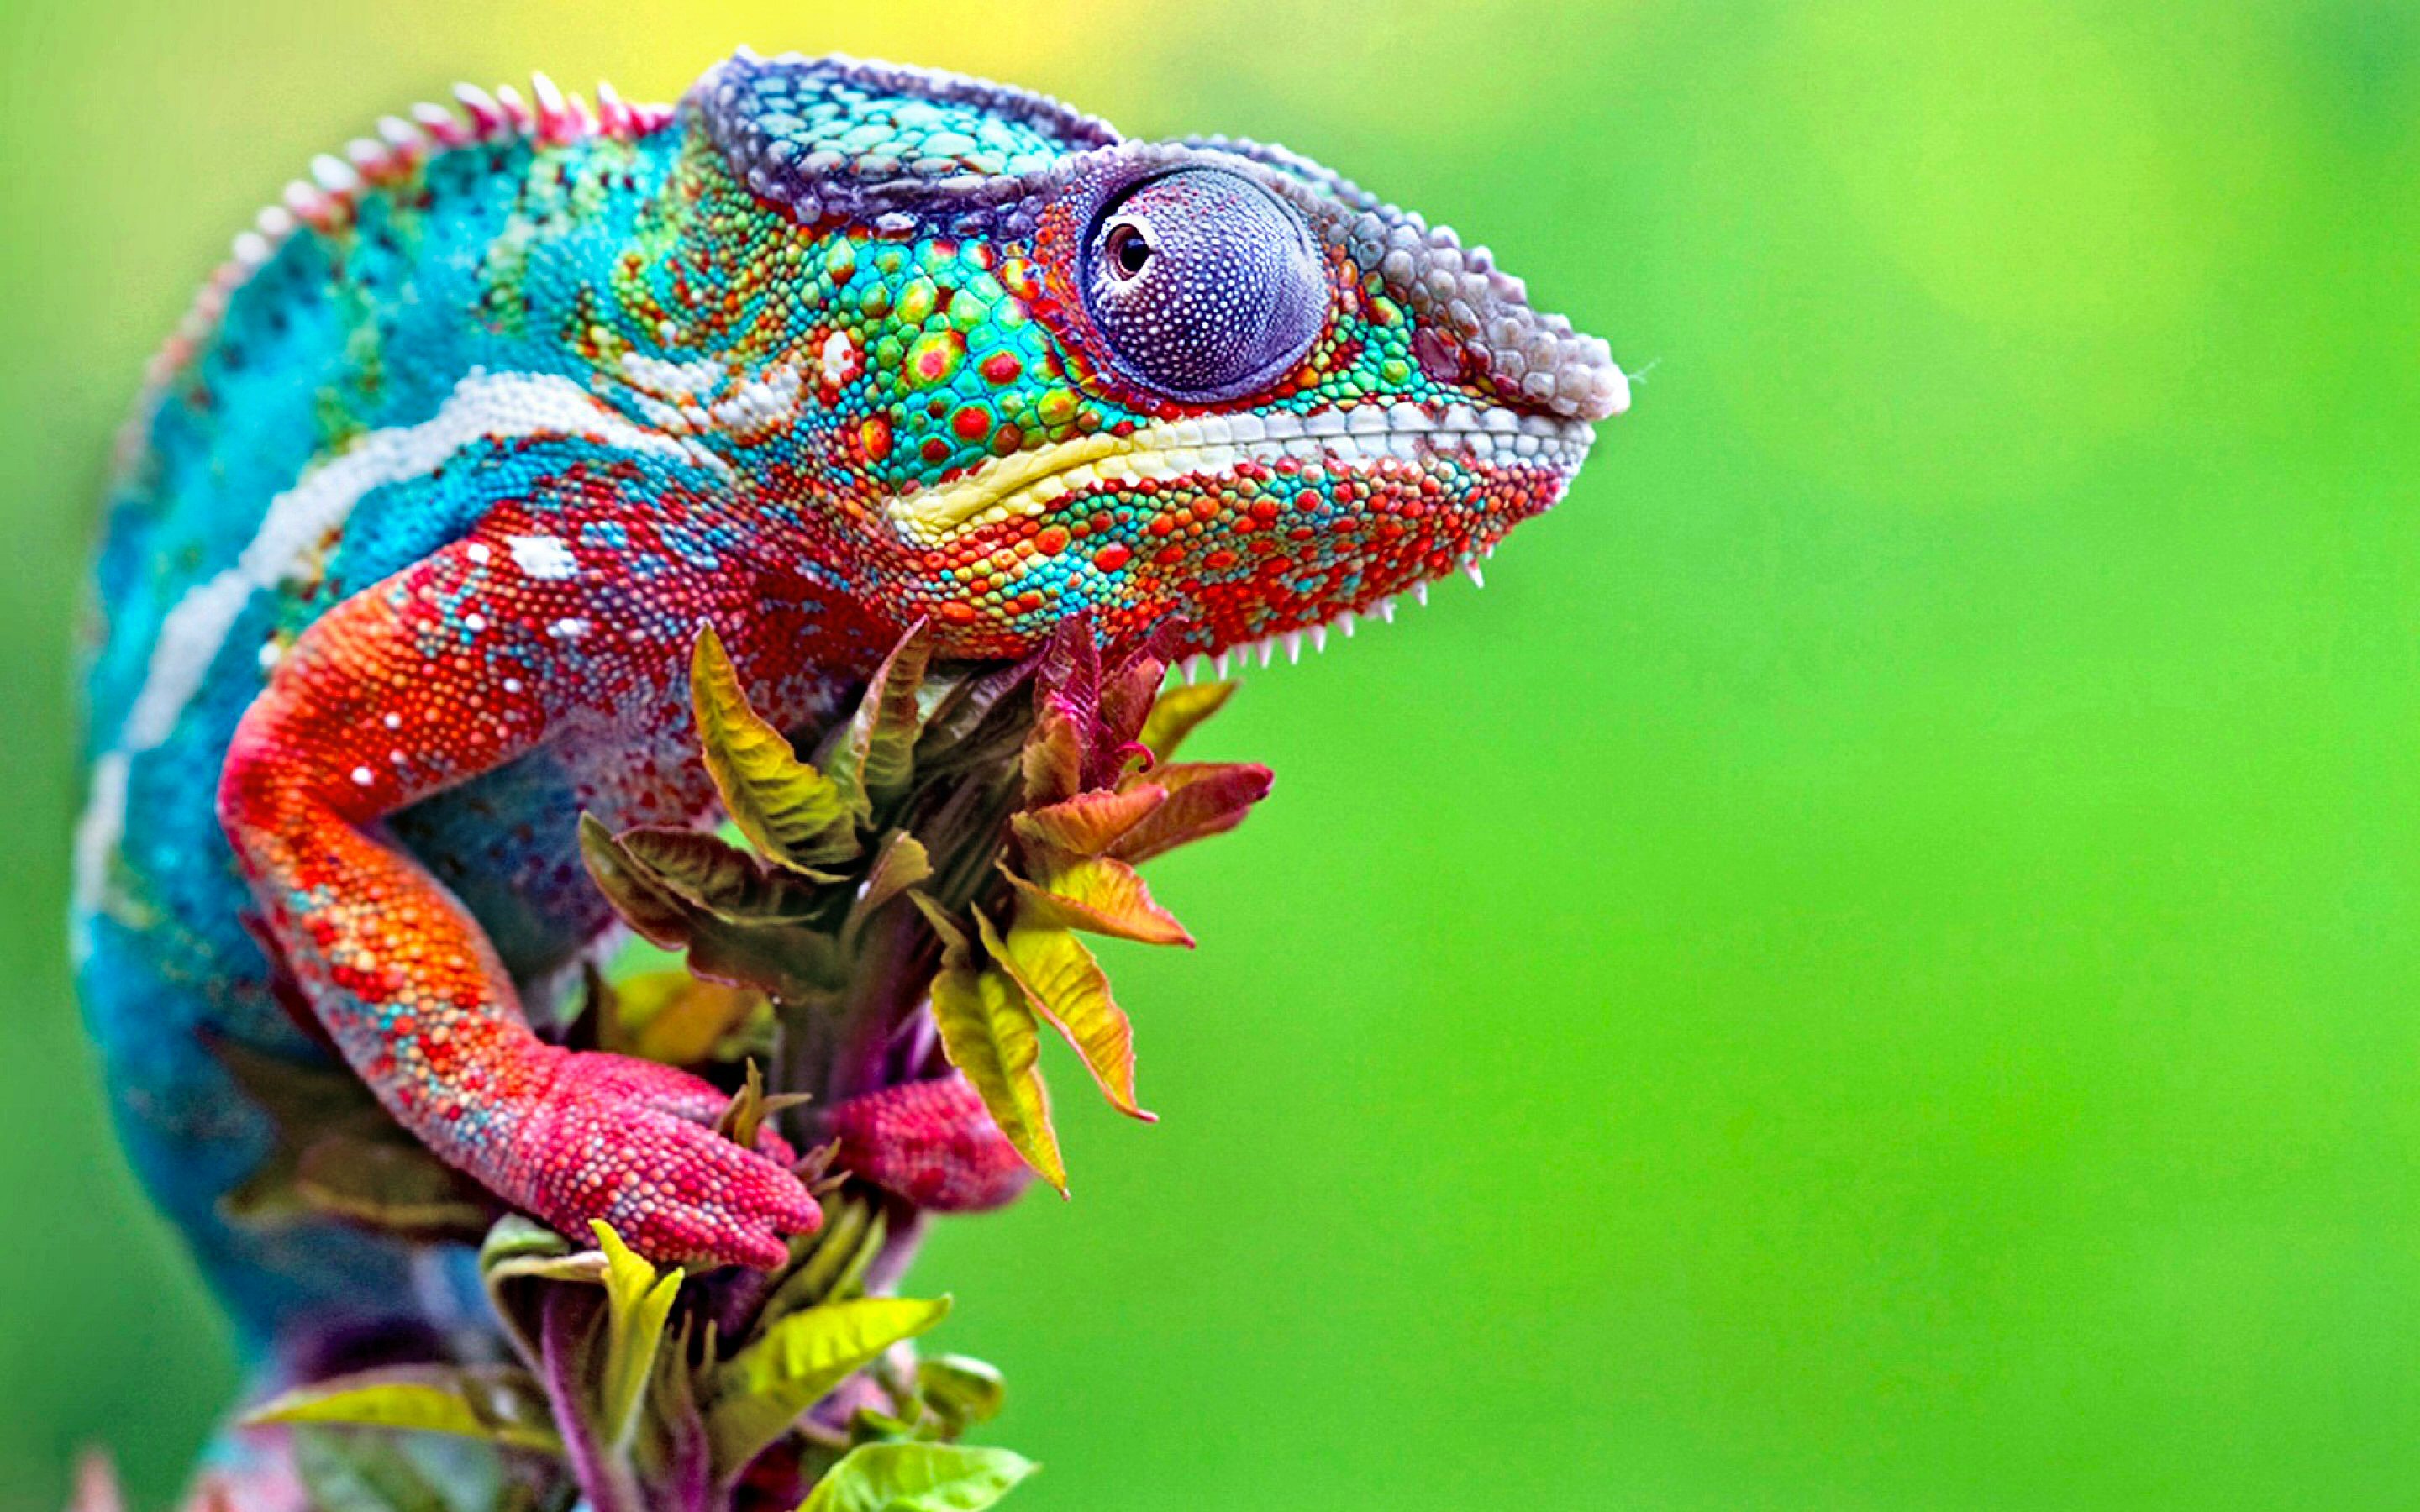 reptiles, colorful, lizard, animal, chameleon